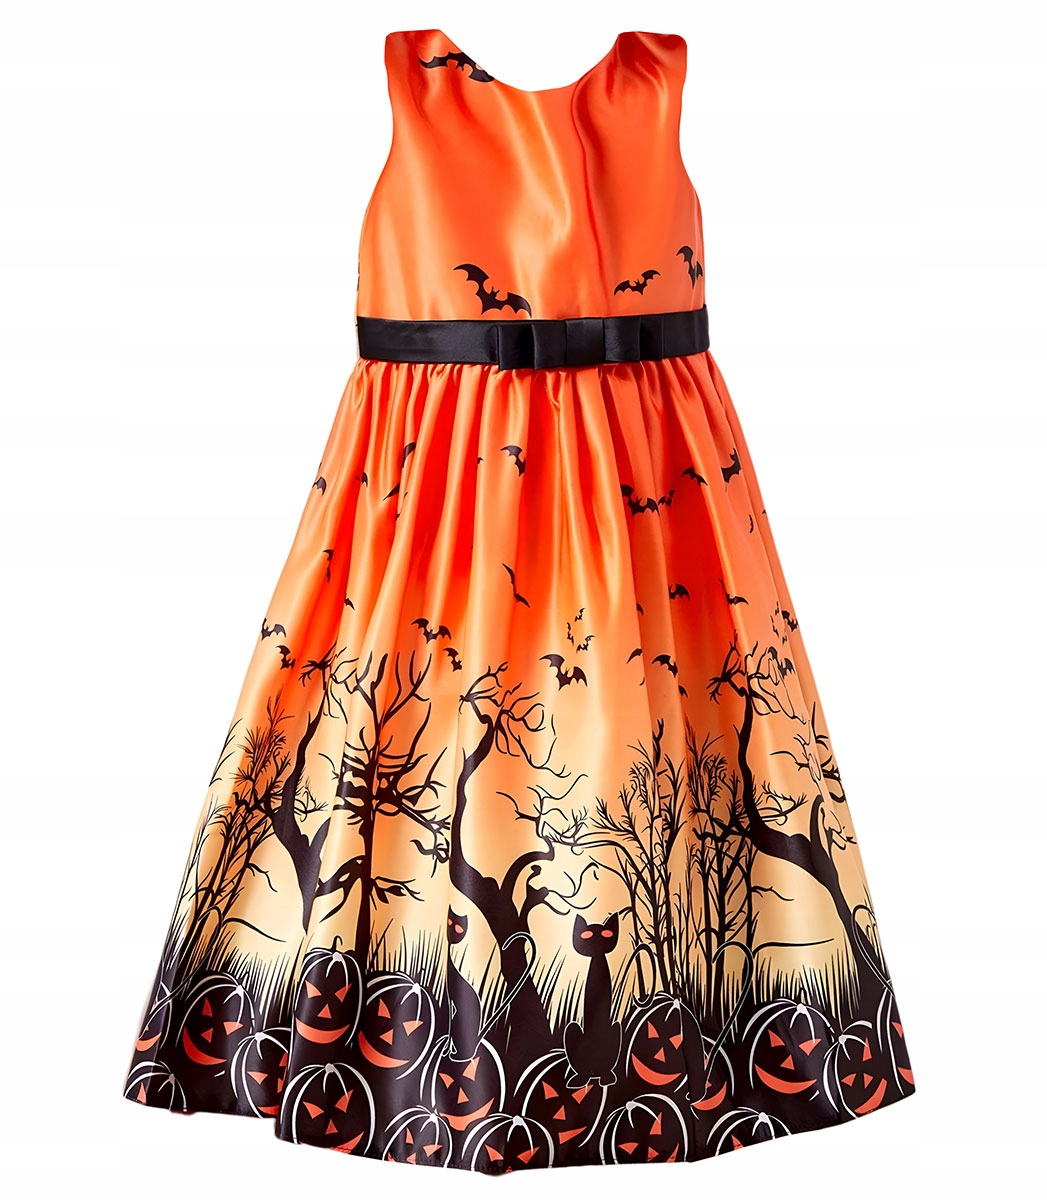 Detské šaty Halloween veľ. 110 - oranžové